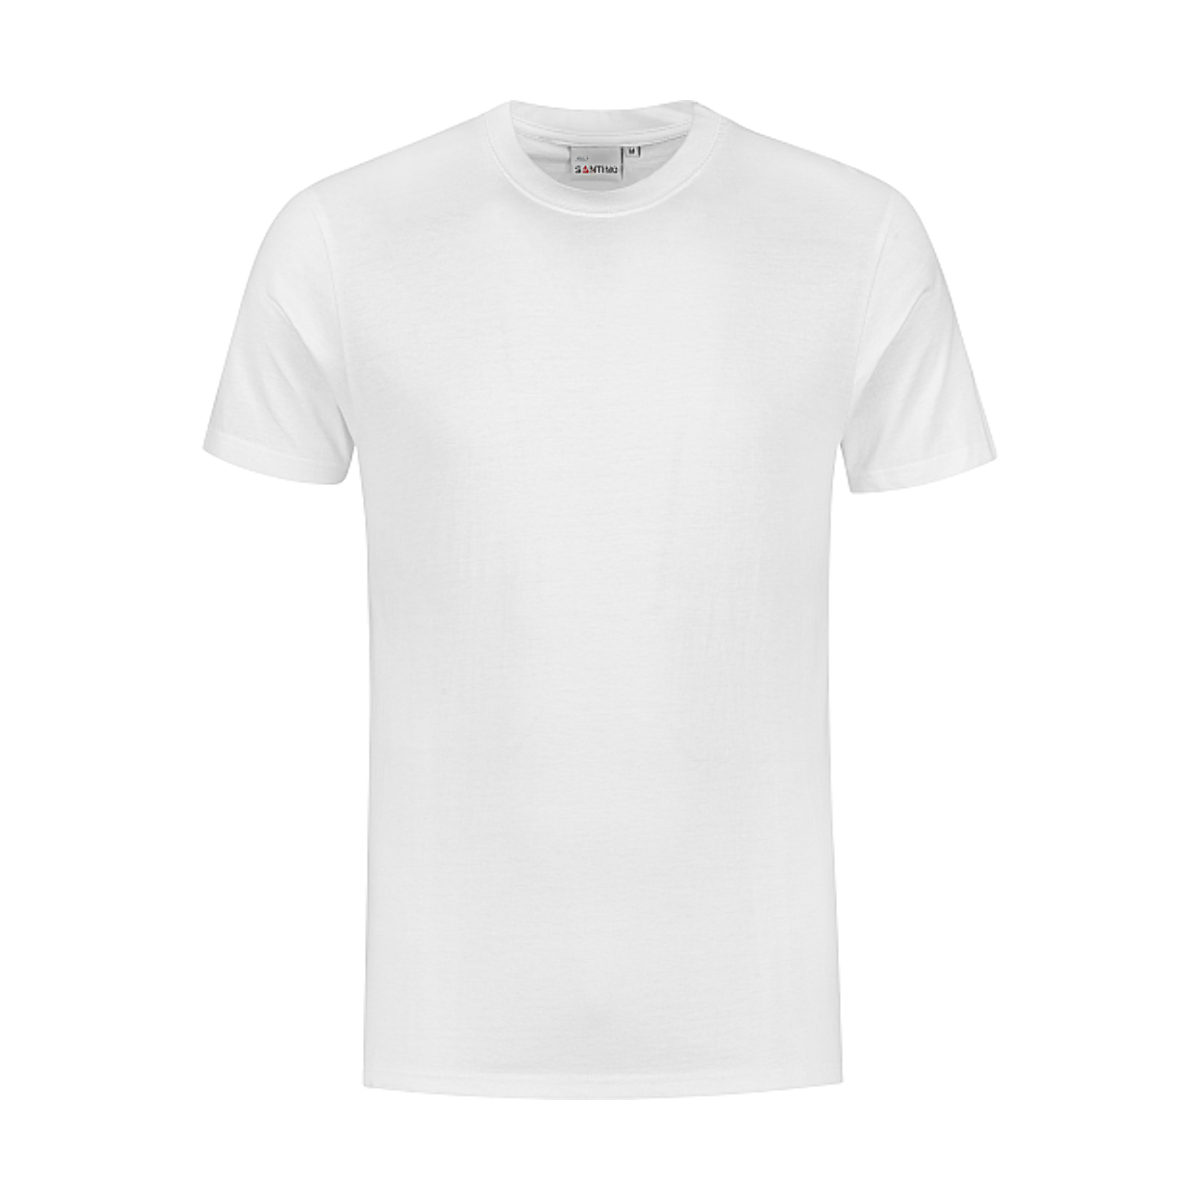 Santino T-shirt Jonaz V-neck - Shirts-bedrukken.nl